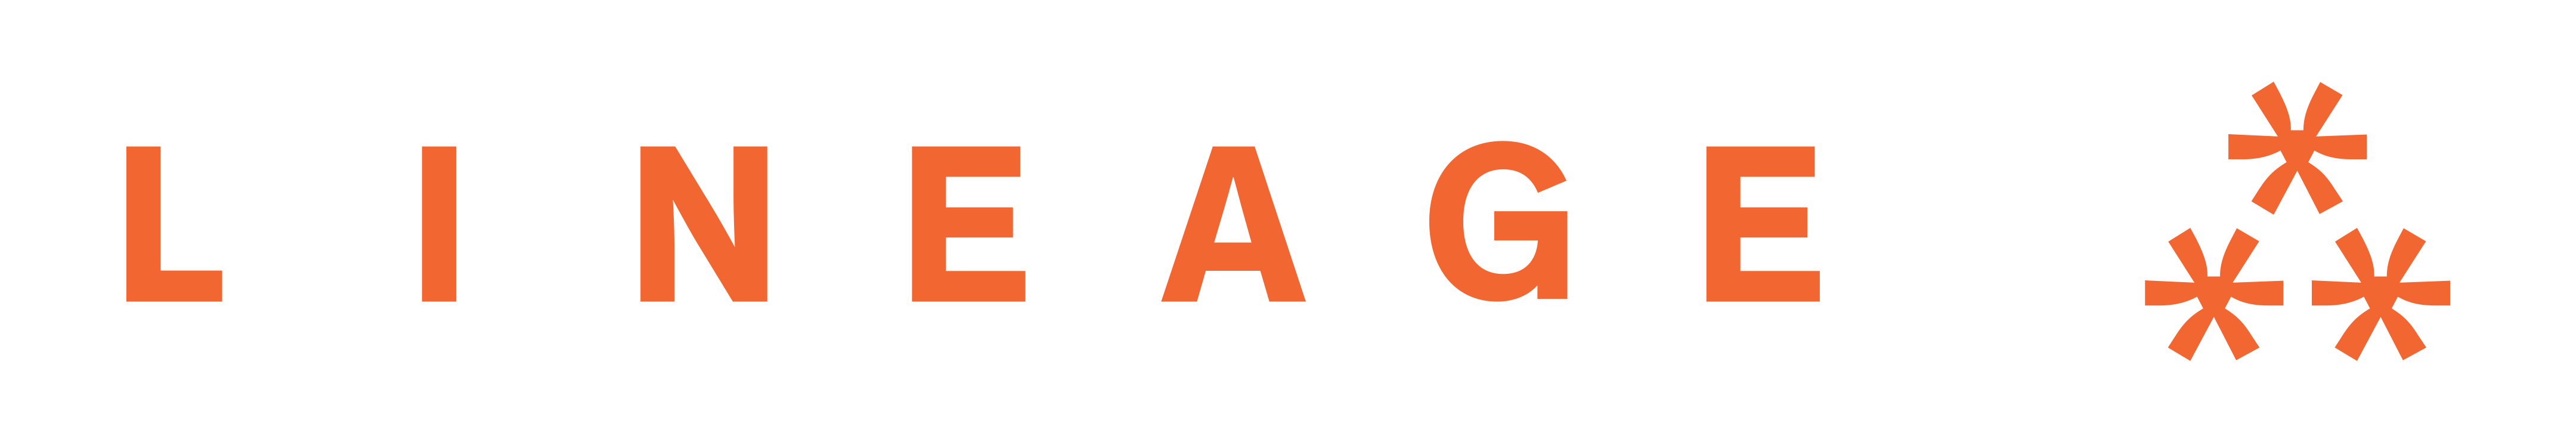 lineage-group-logo-horizontal